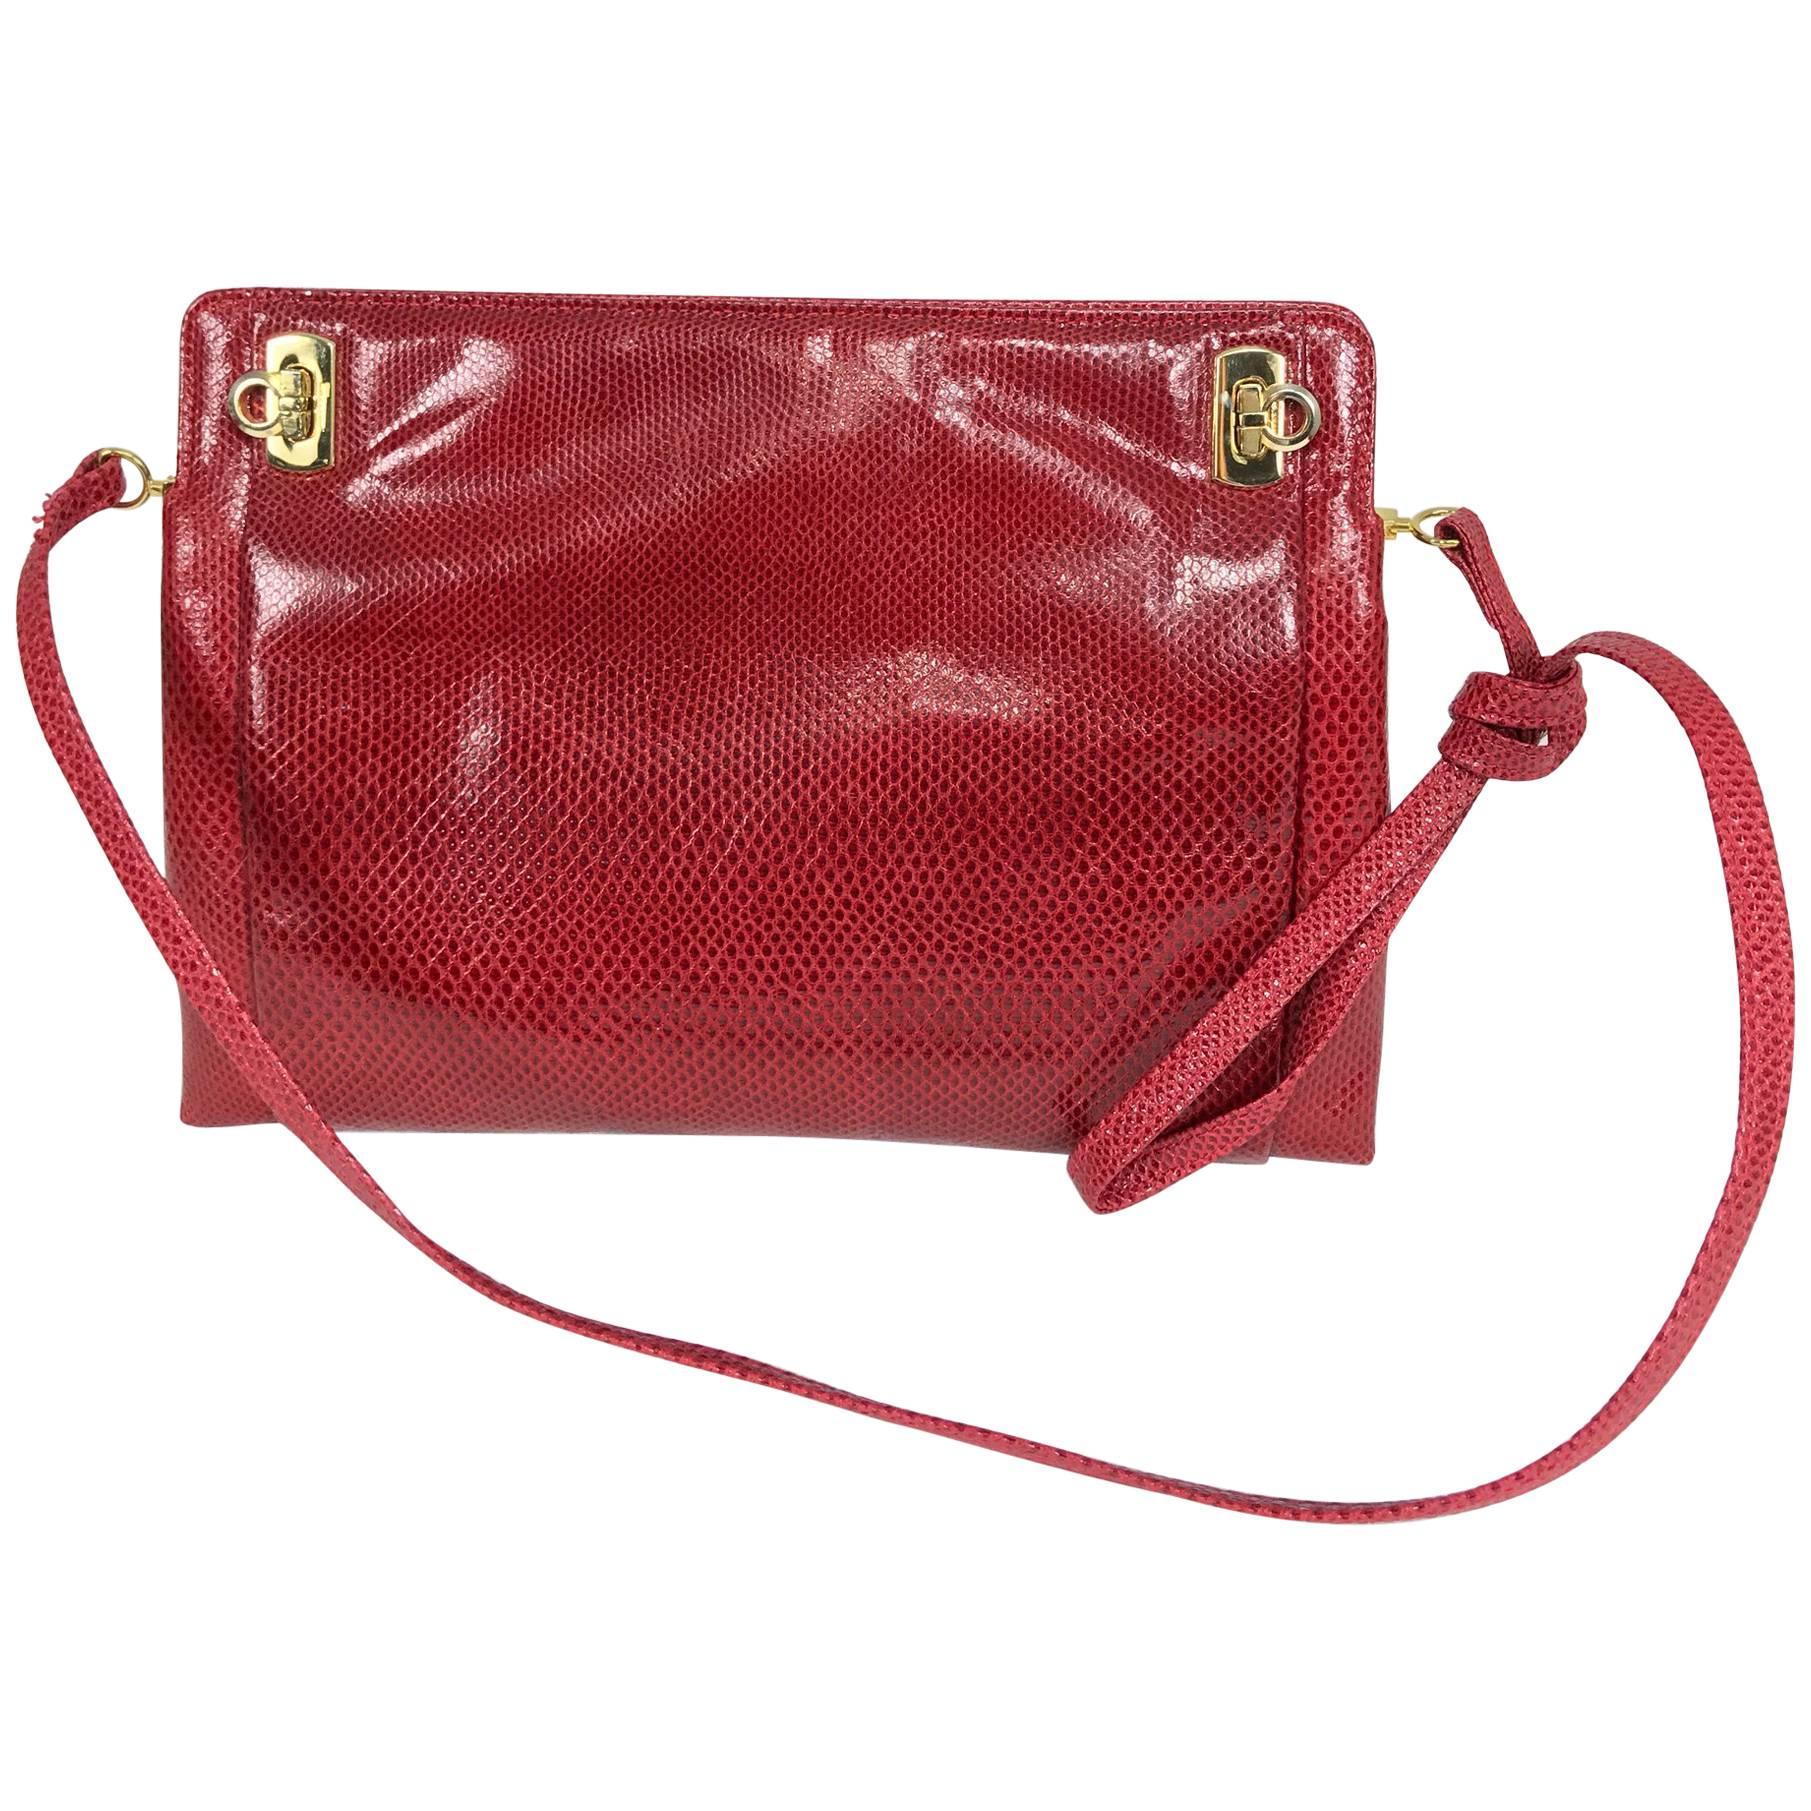 Vintage Ferragamo red lizard clutch cross body handbag 1980s